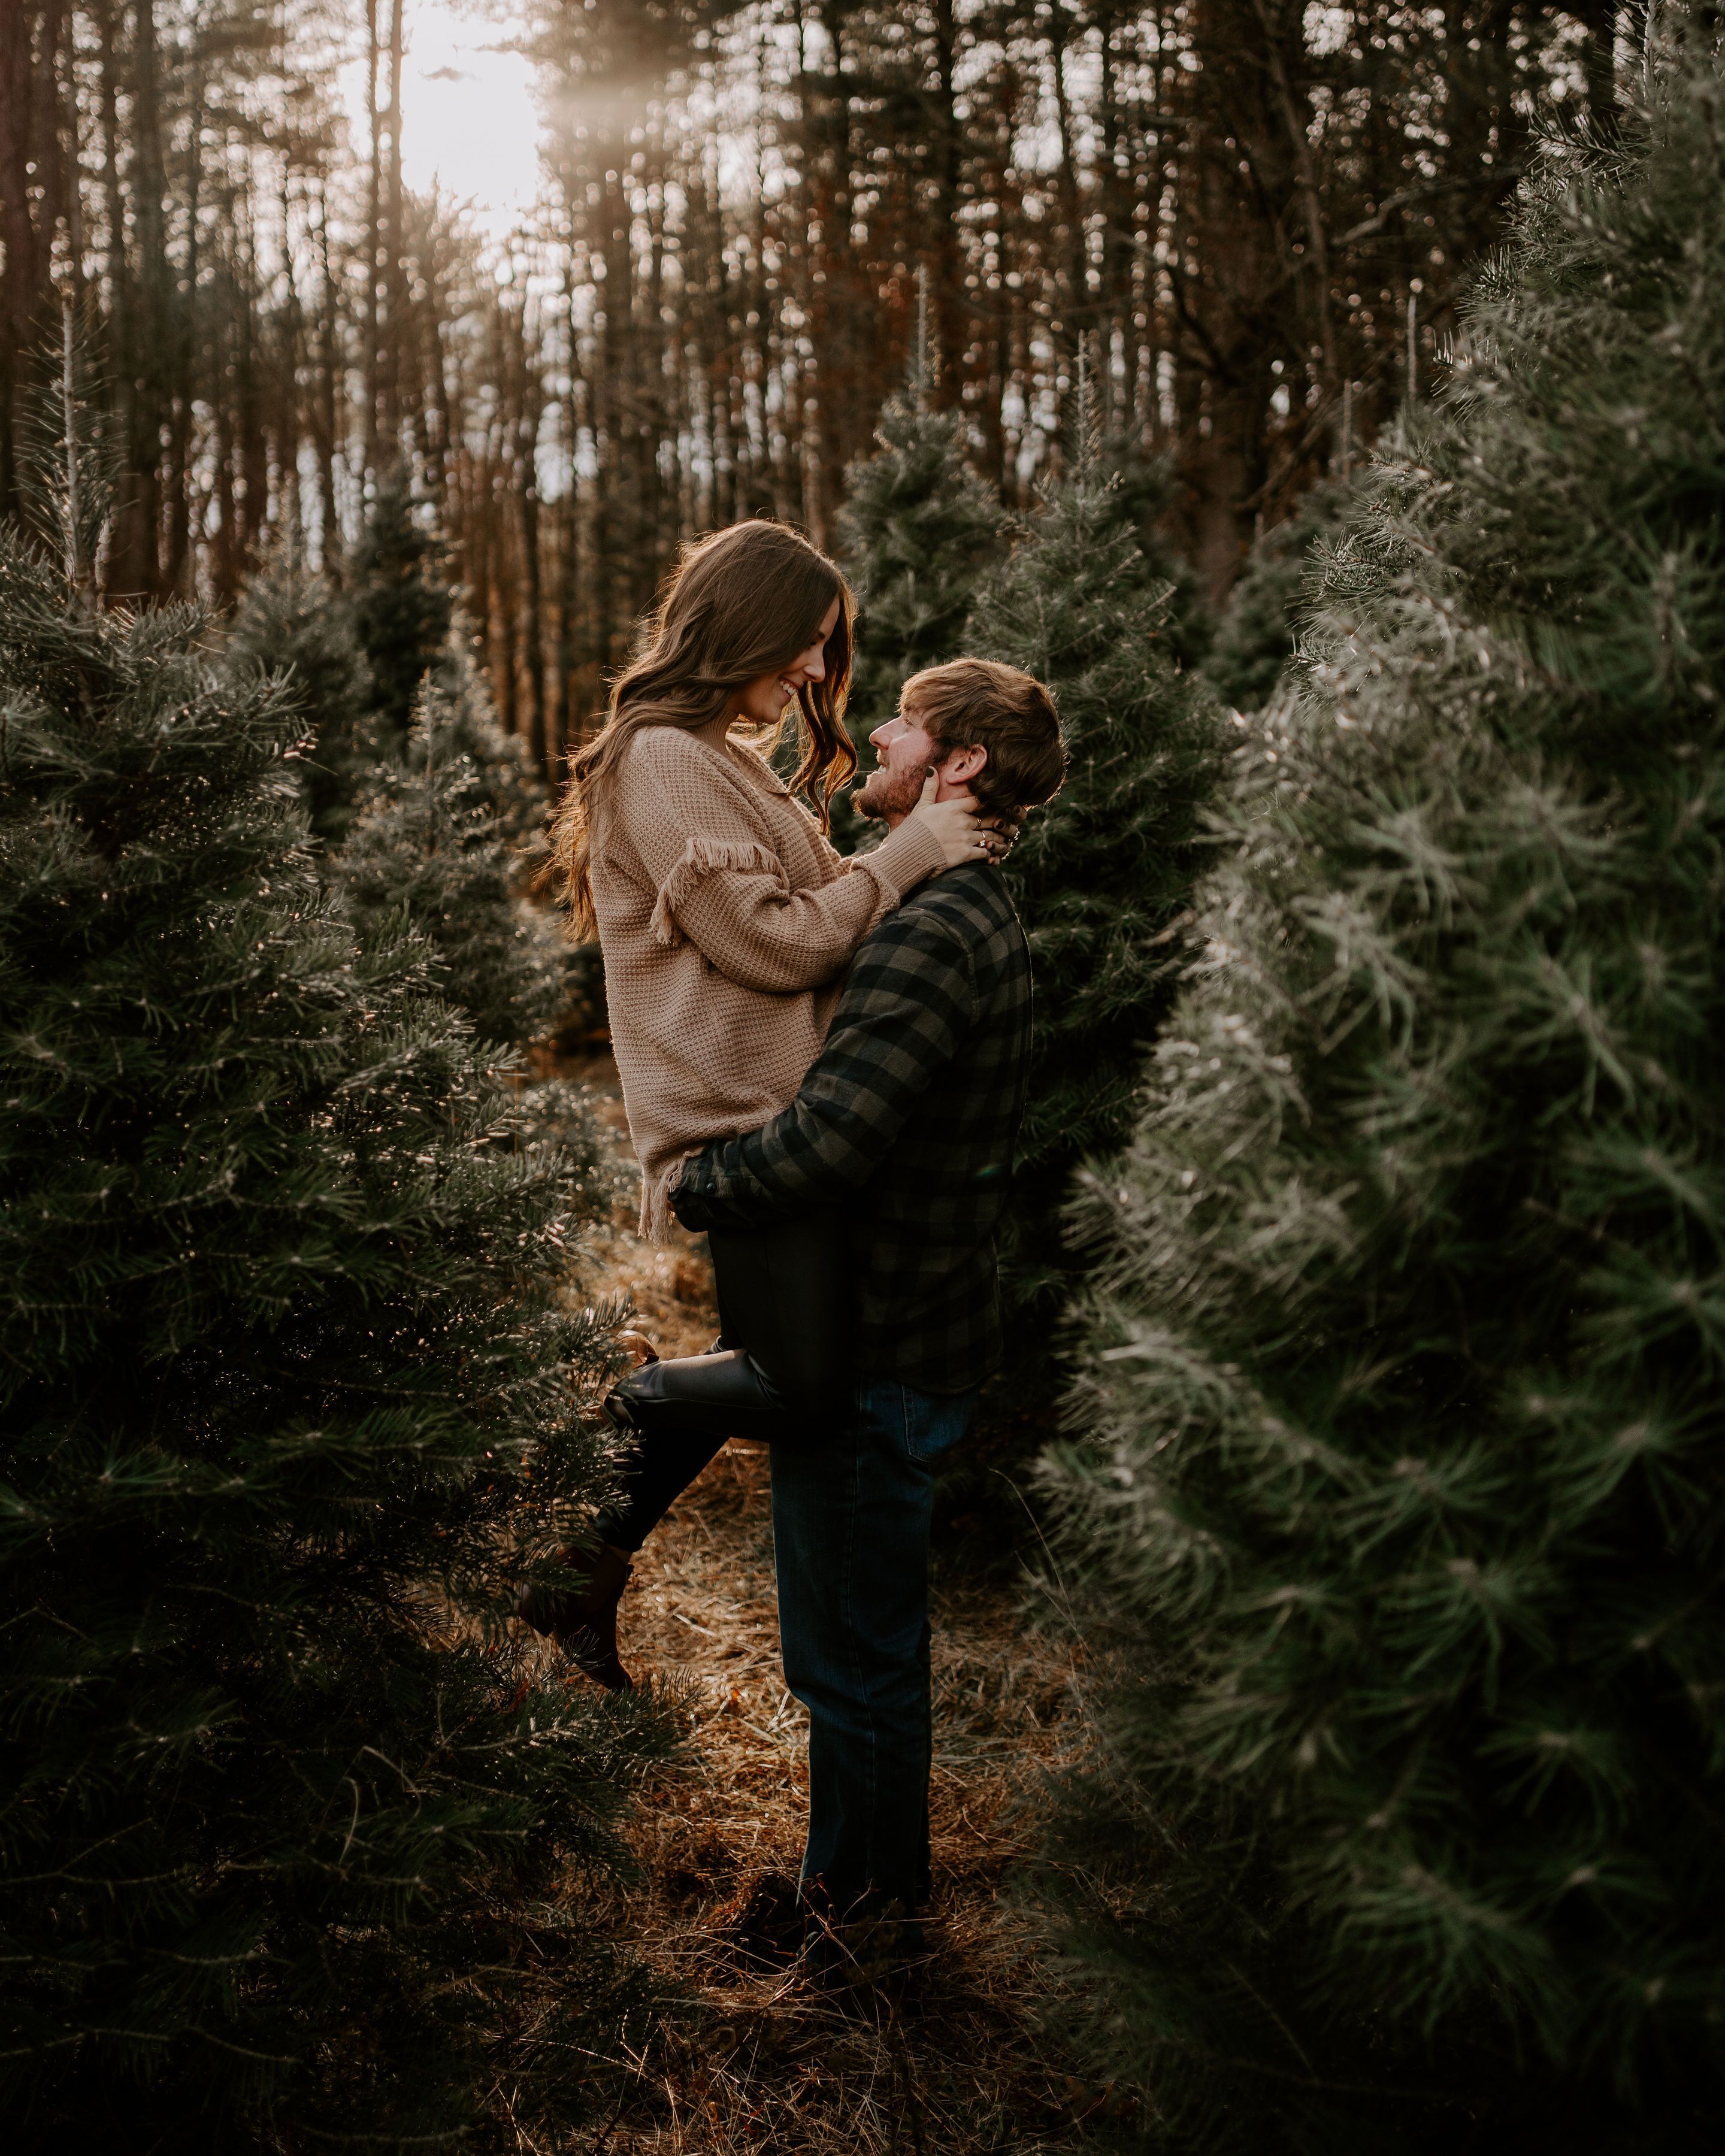 Christmas tree farm couple phtoos -   18 christmas photoshoot couples ideas